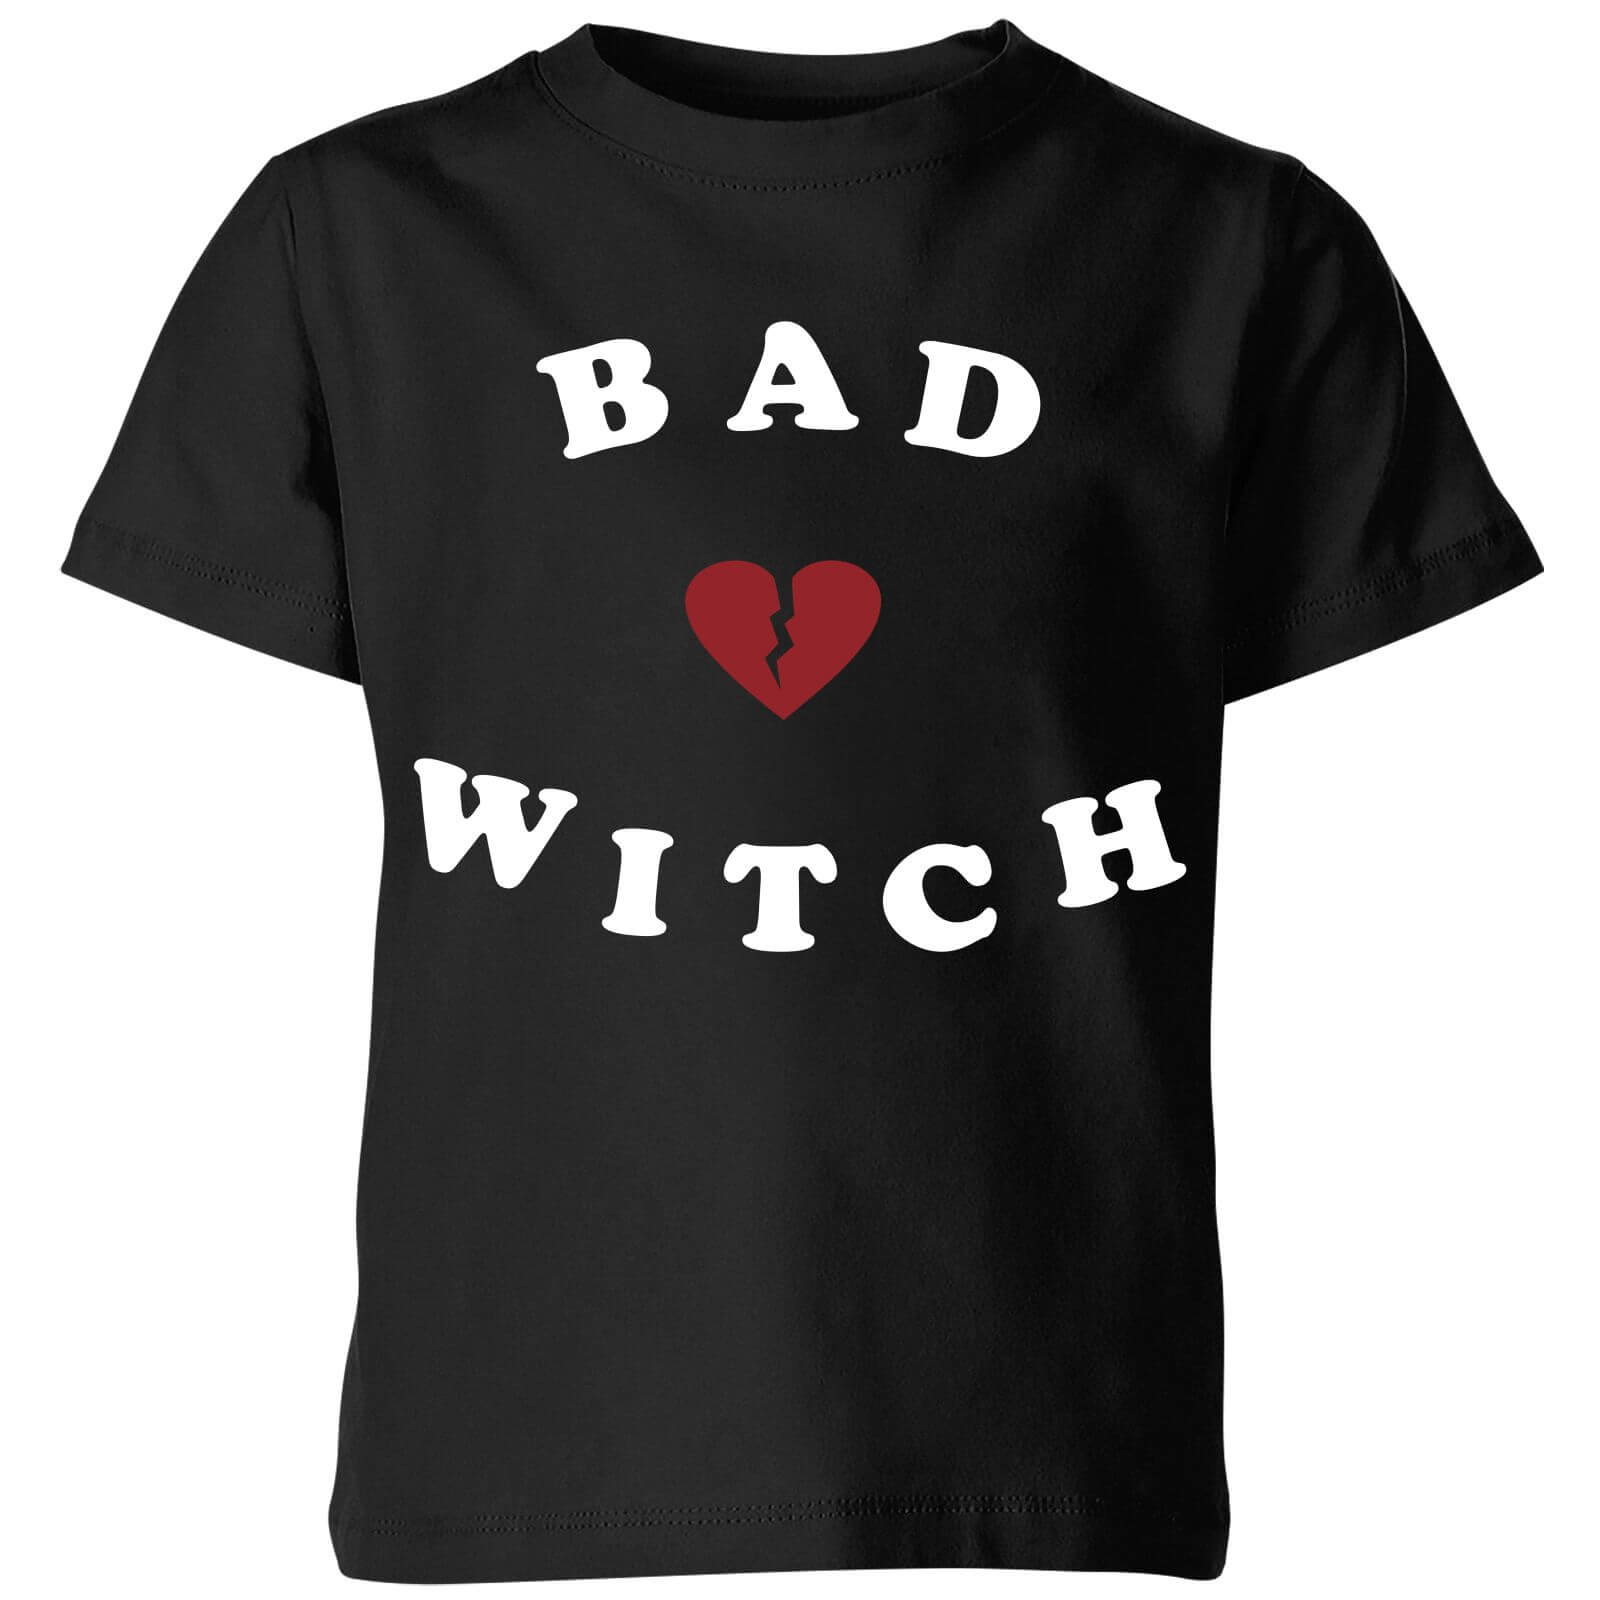 Bad Witch Kids' T-Shirt - Black - 3-4 Years - Black